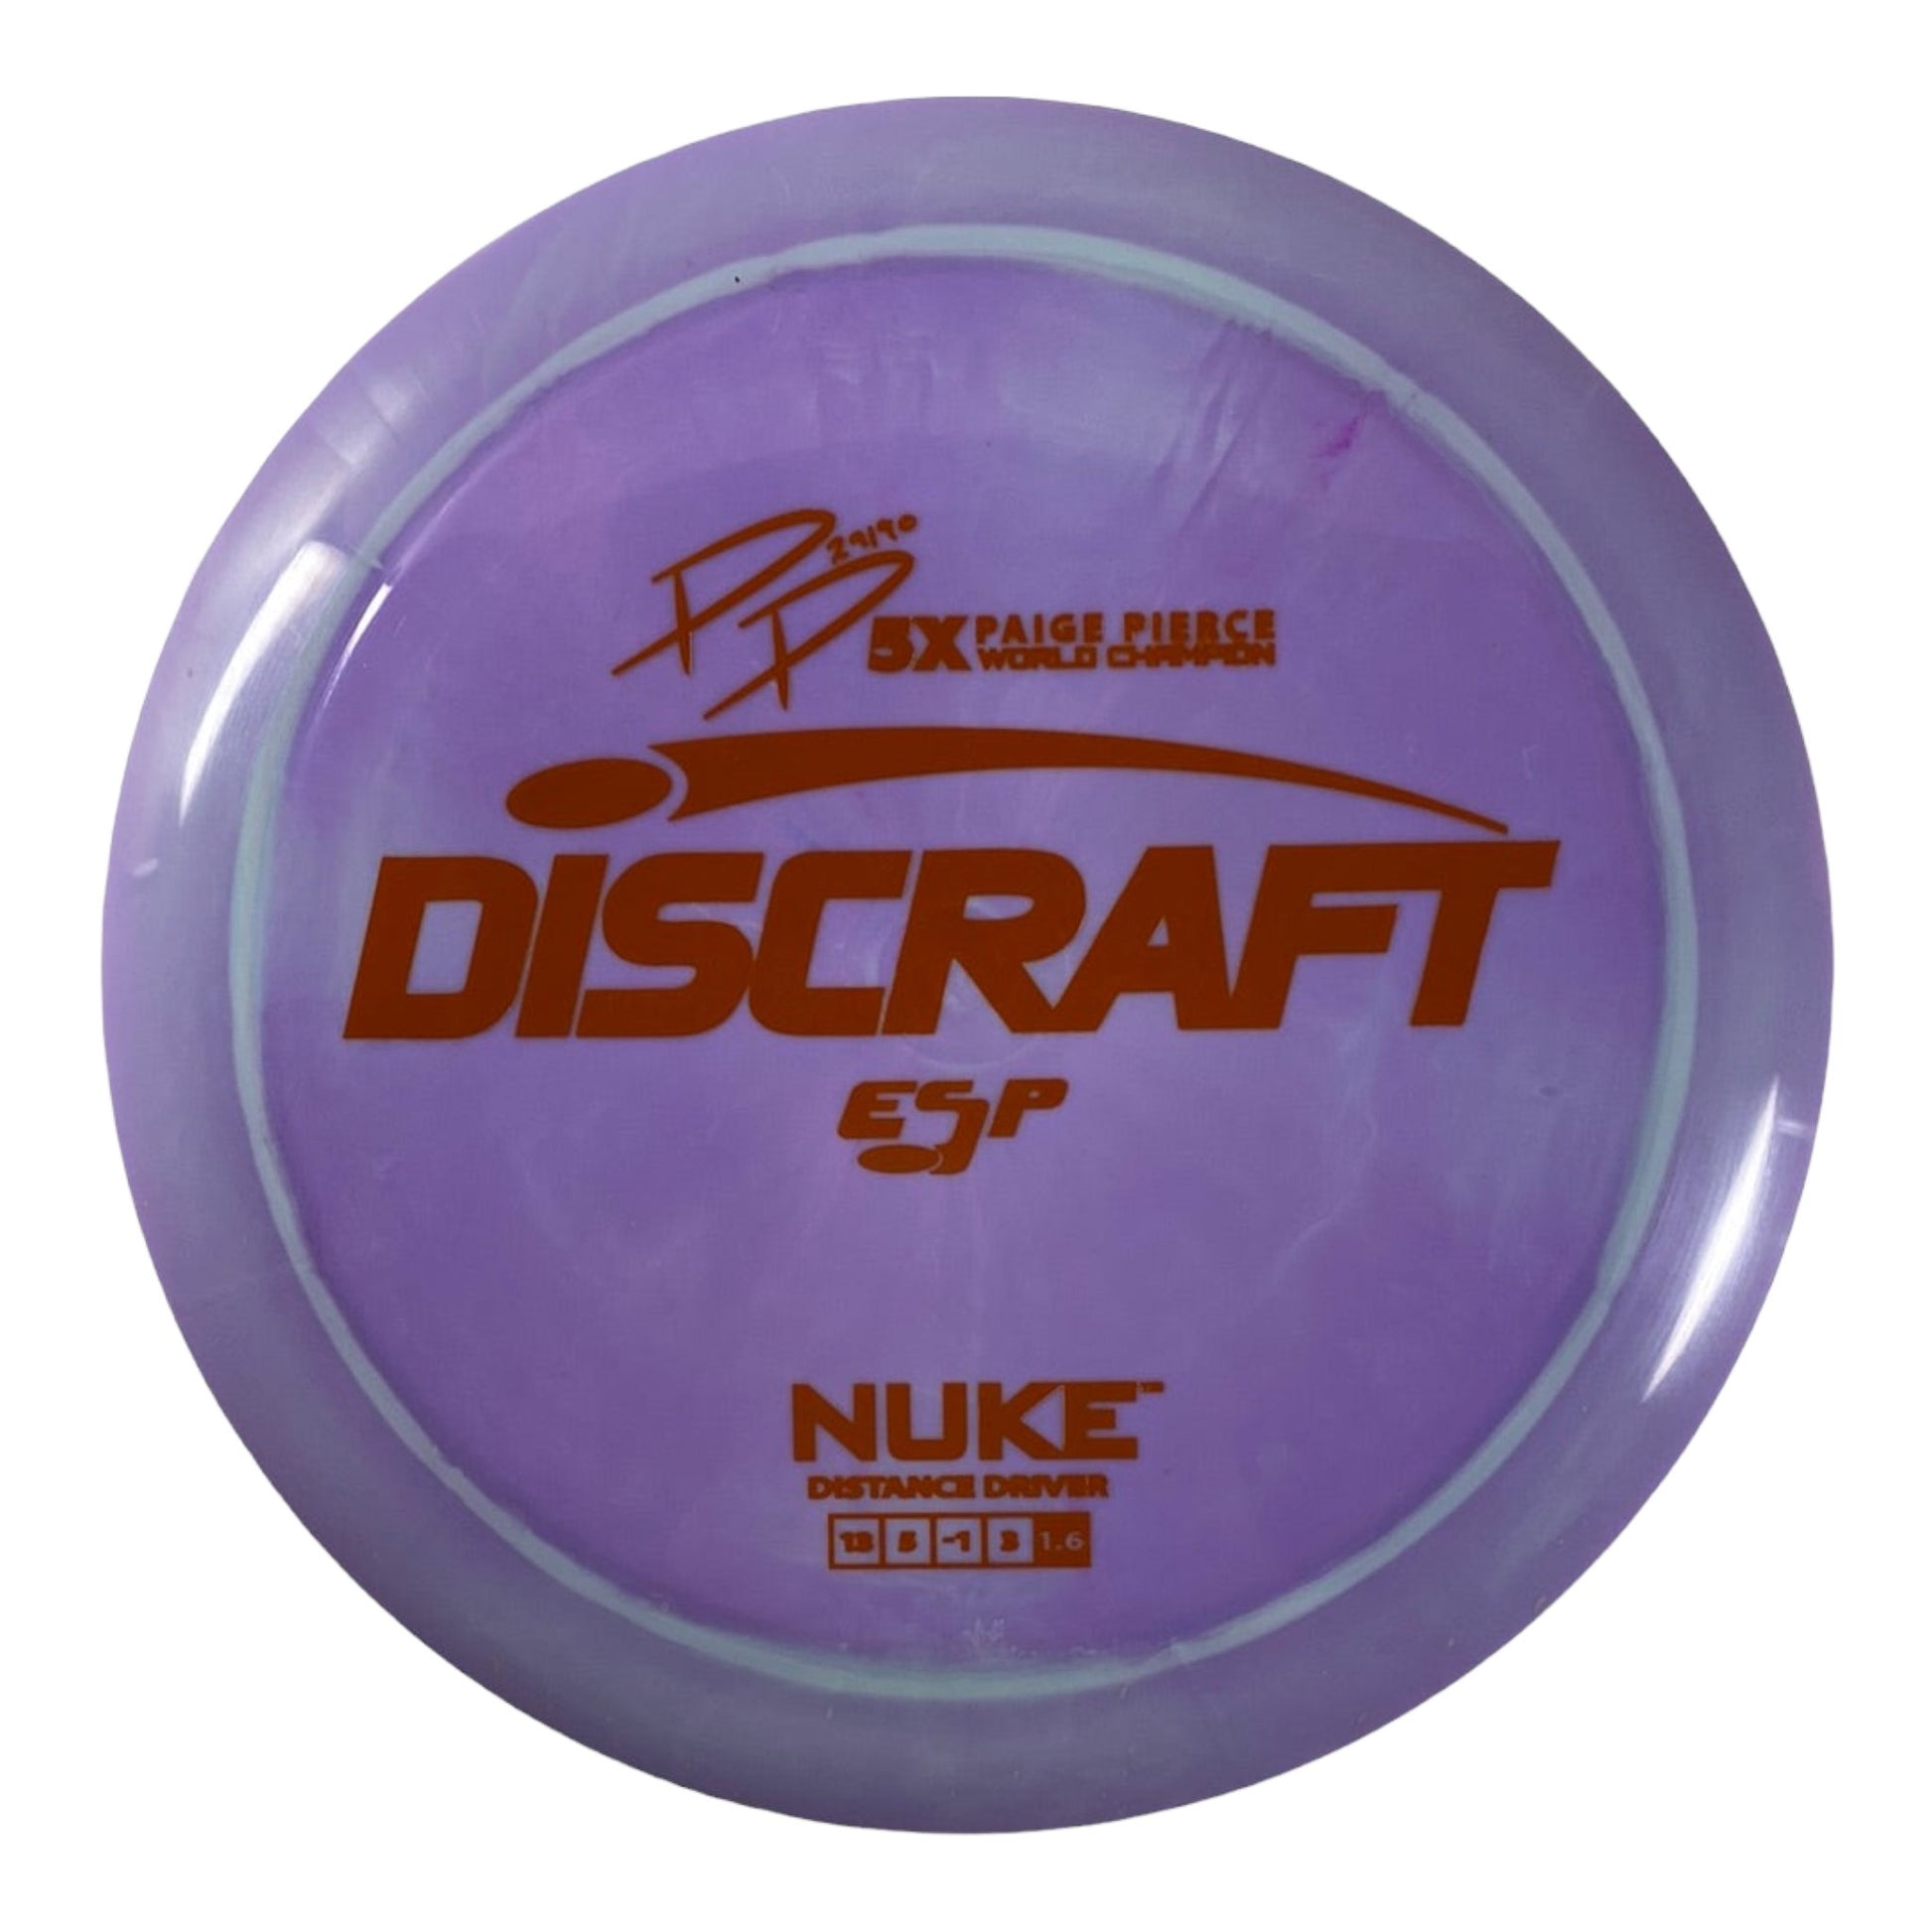 Discraft Nuke | ESP | Purple/Orange 173g (Paige Pierce) Disc Golf